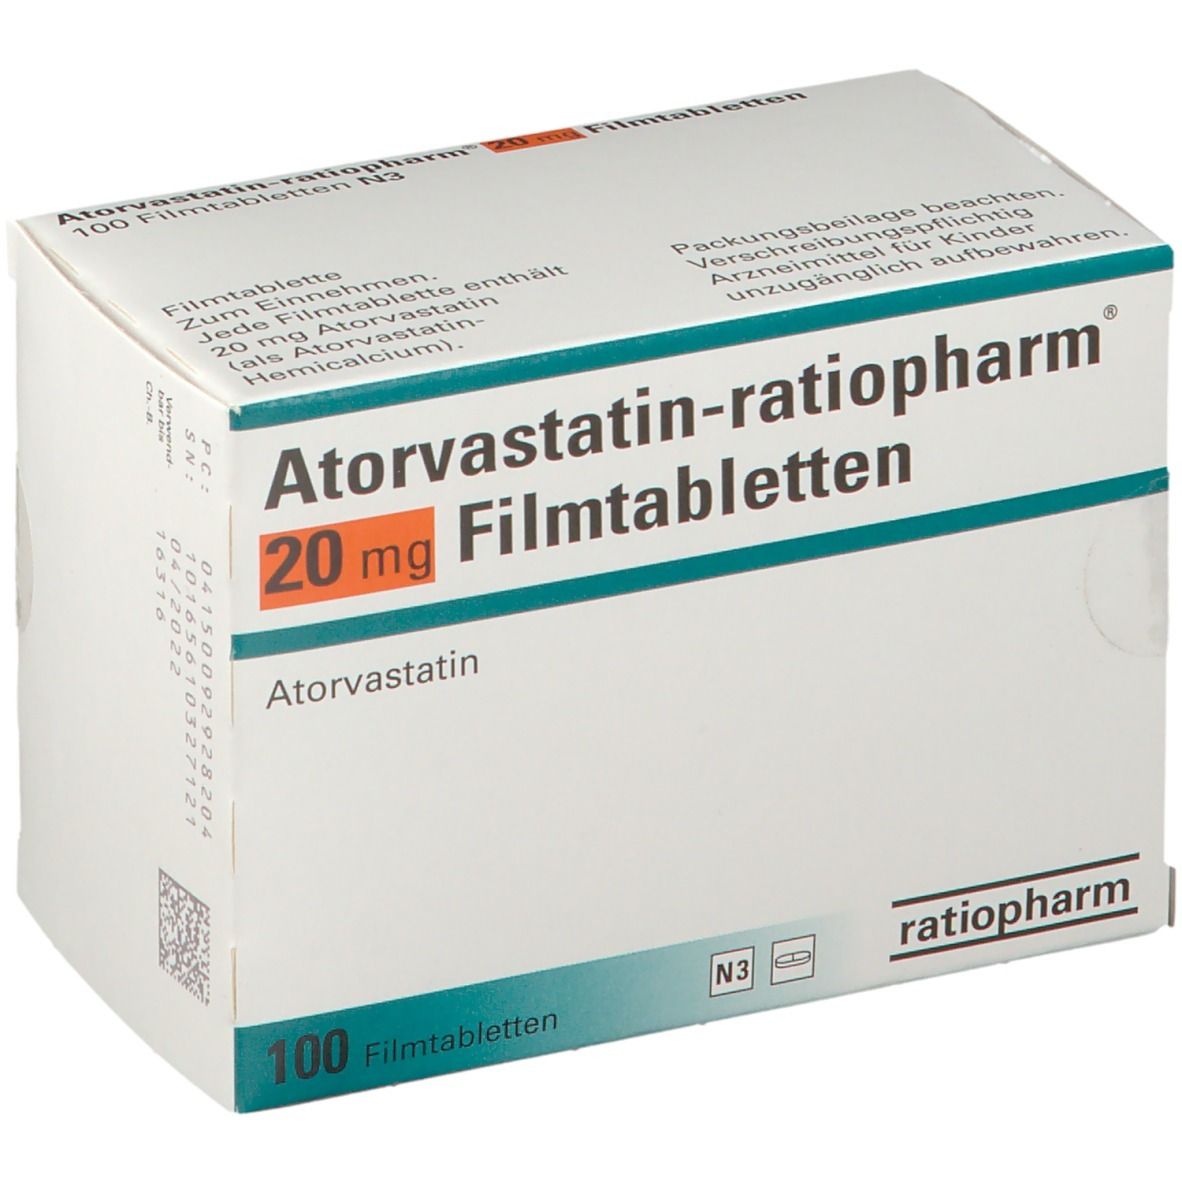 20 mg atorvastatin atorvastatin: Uses,